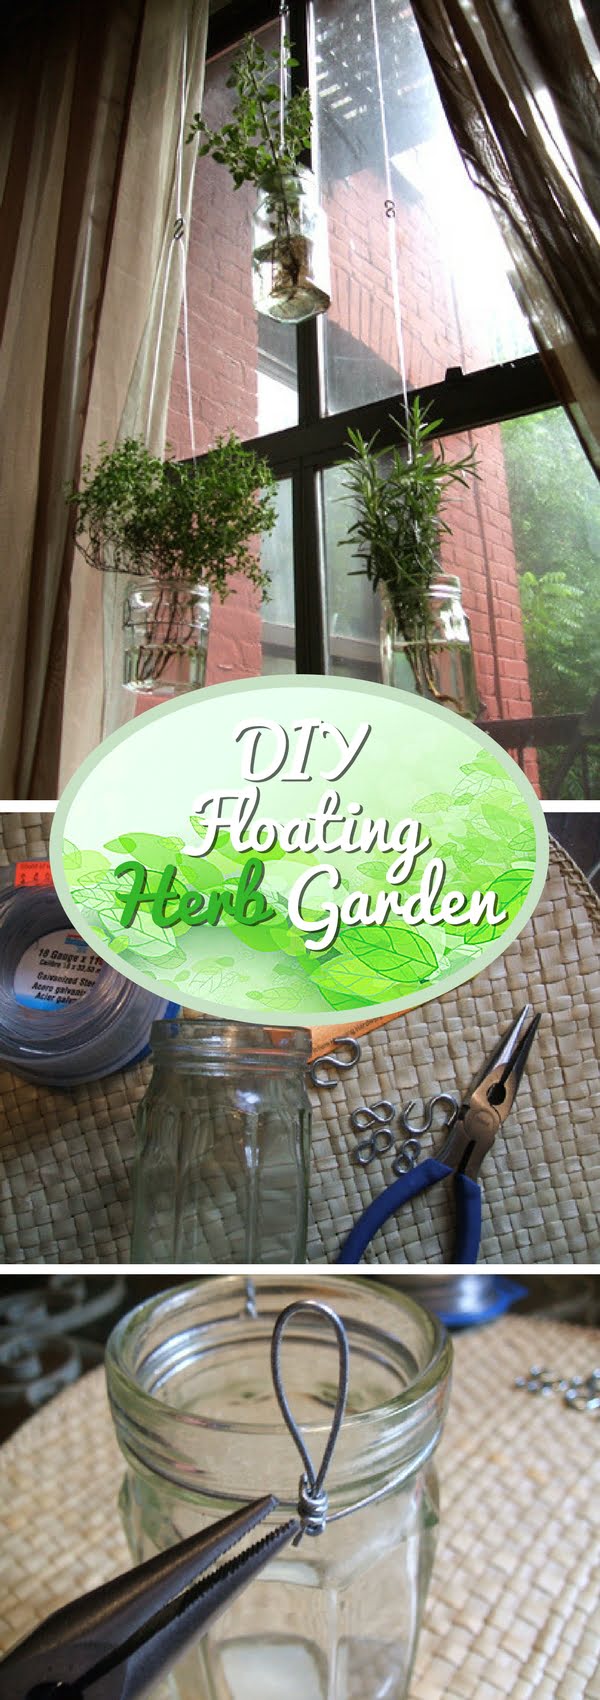 15 Cool DIY Ways to Start an Indoor Herb Garden